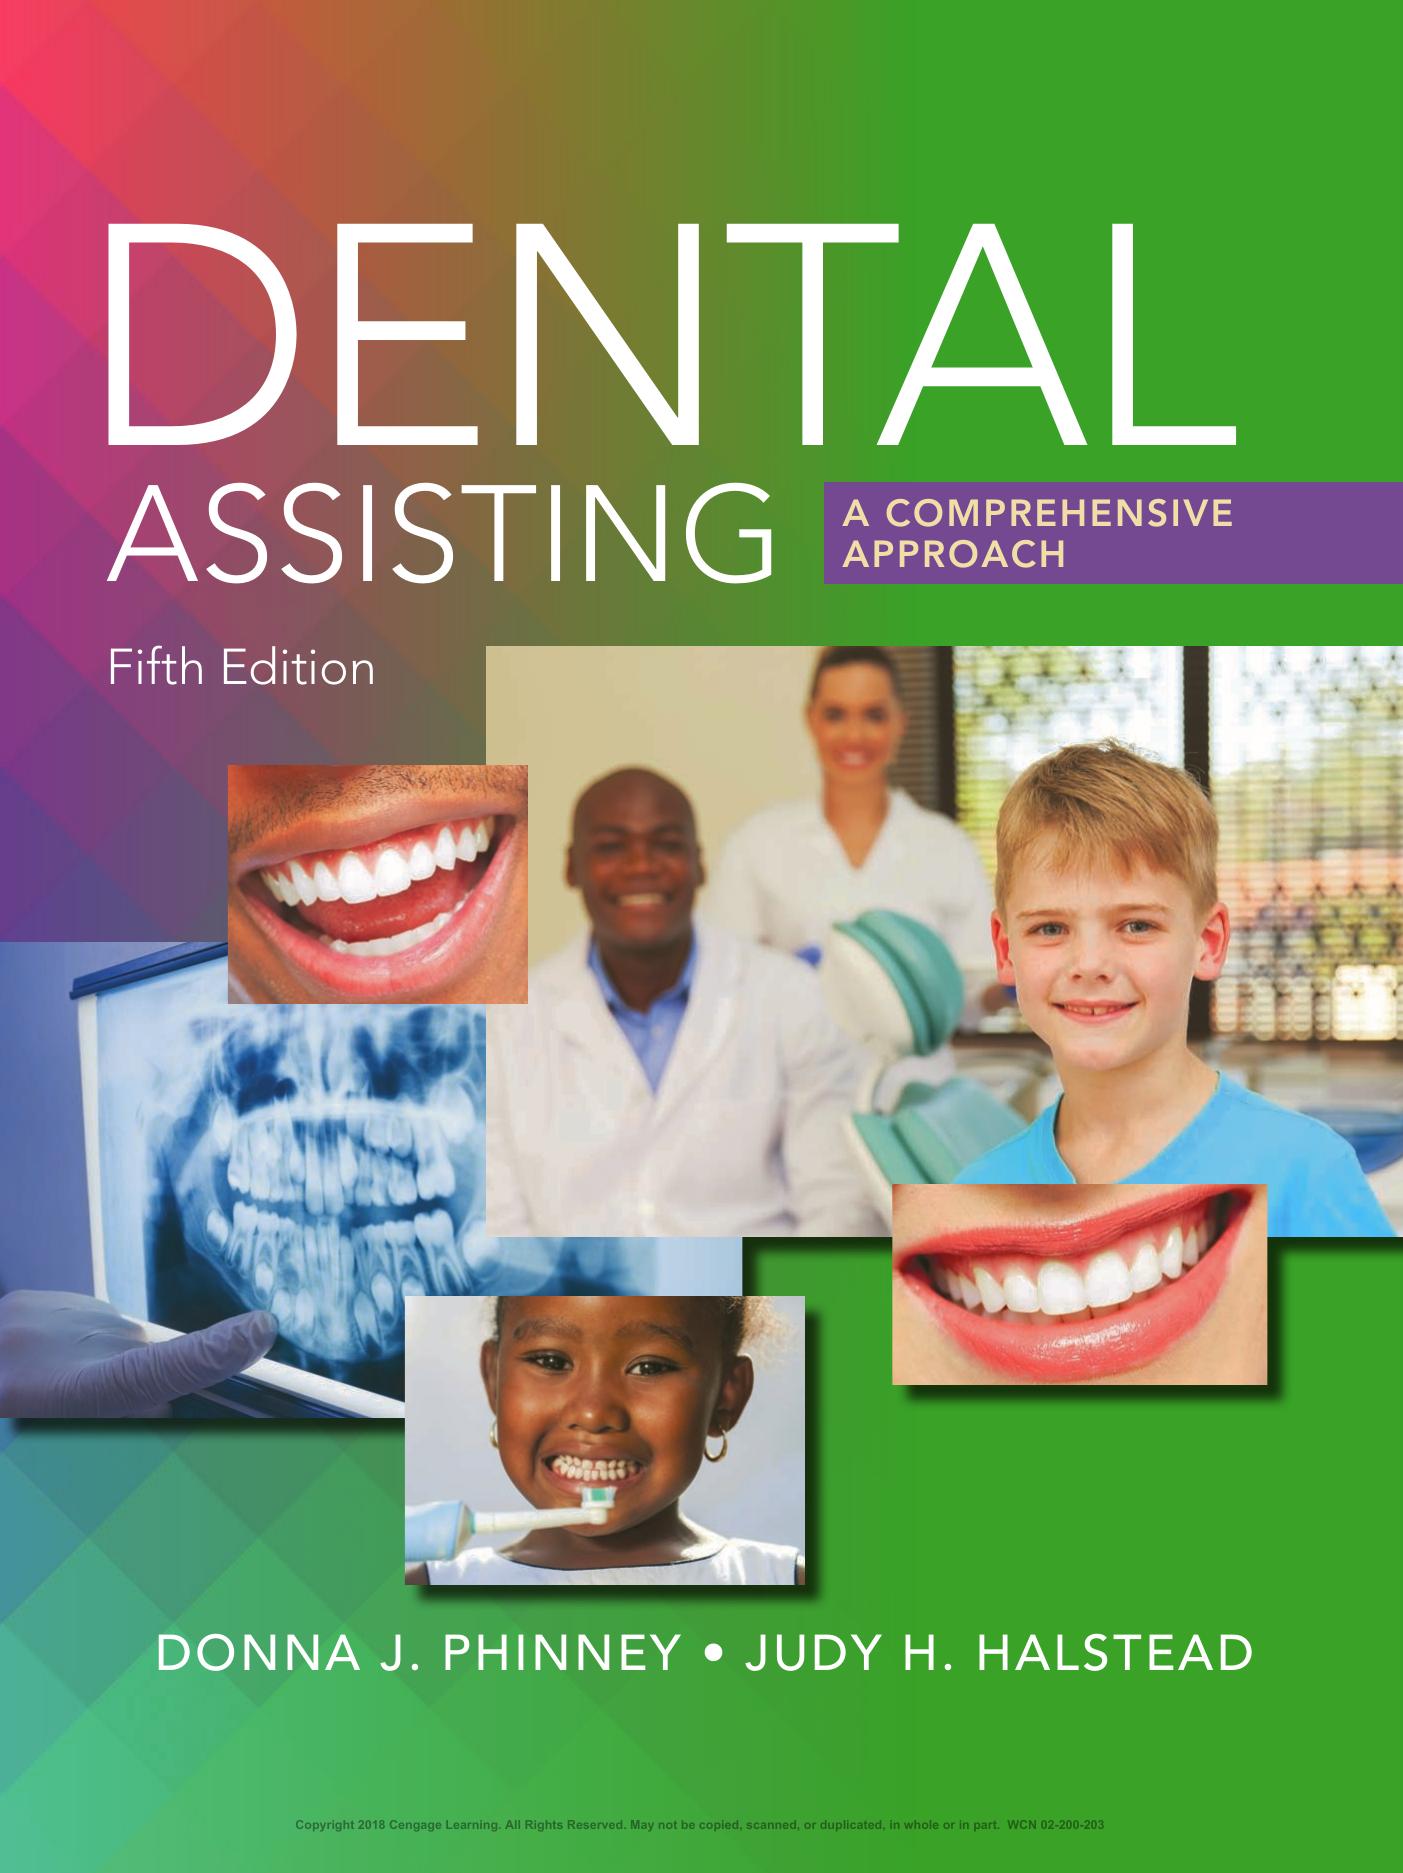 Dental Assisting_ A Comprehensive Approach 5th - Wei Zhi.jpg